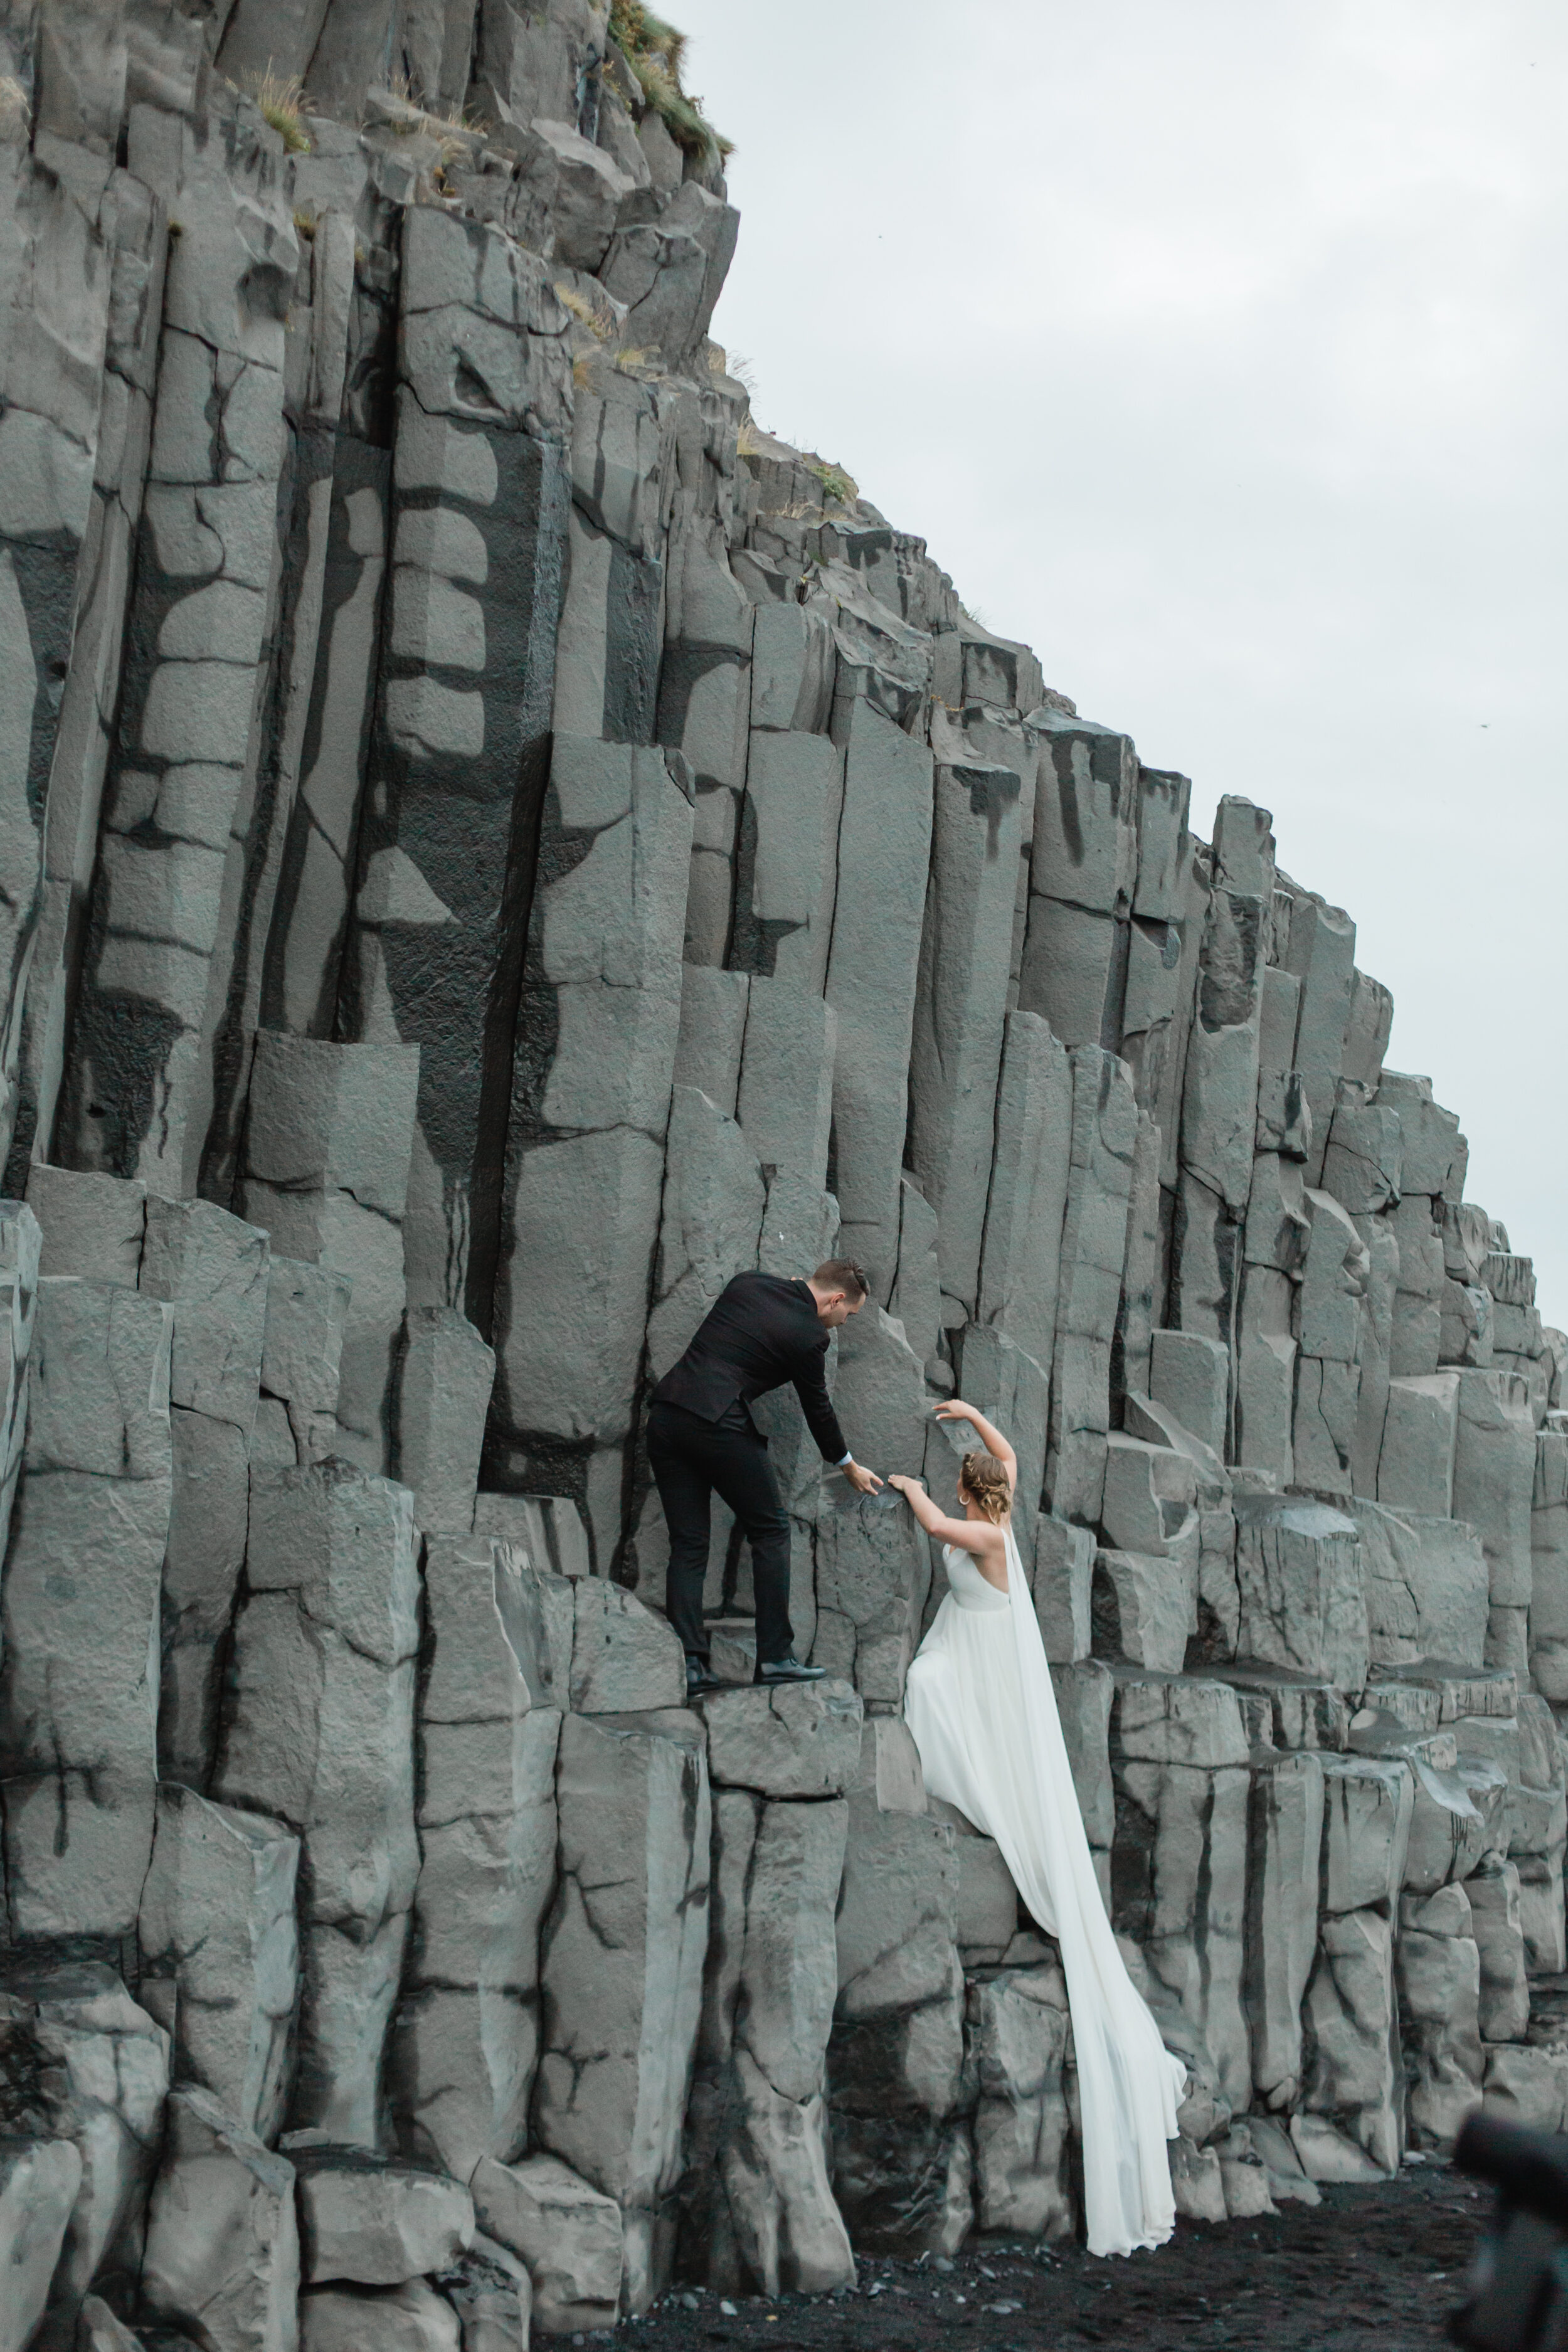 A groom helps his bride onto basalt columns in Iceland.